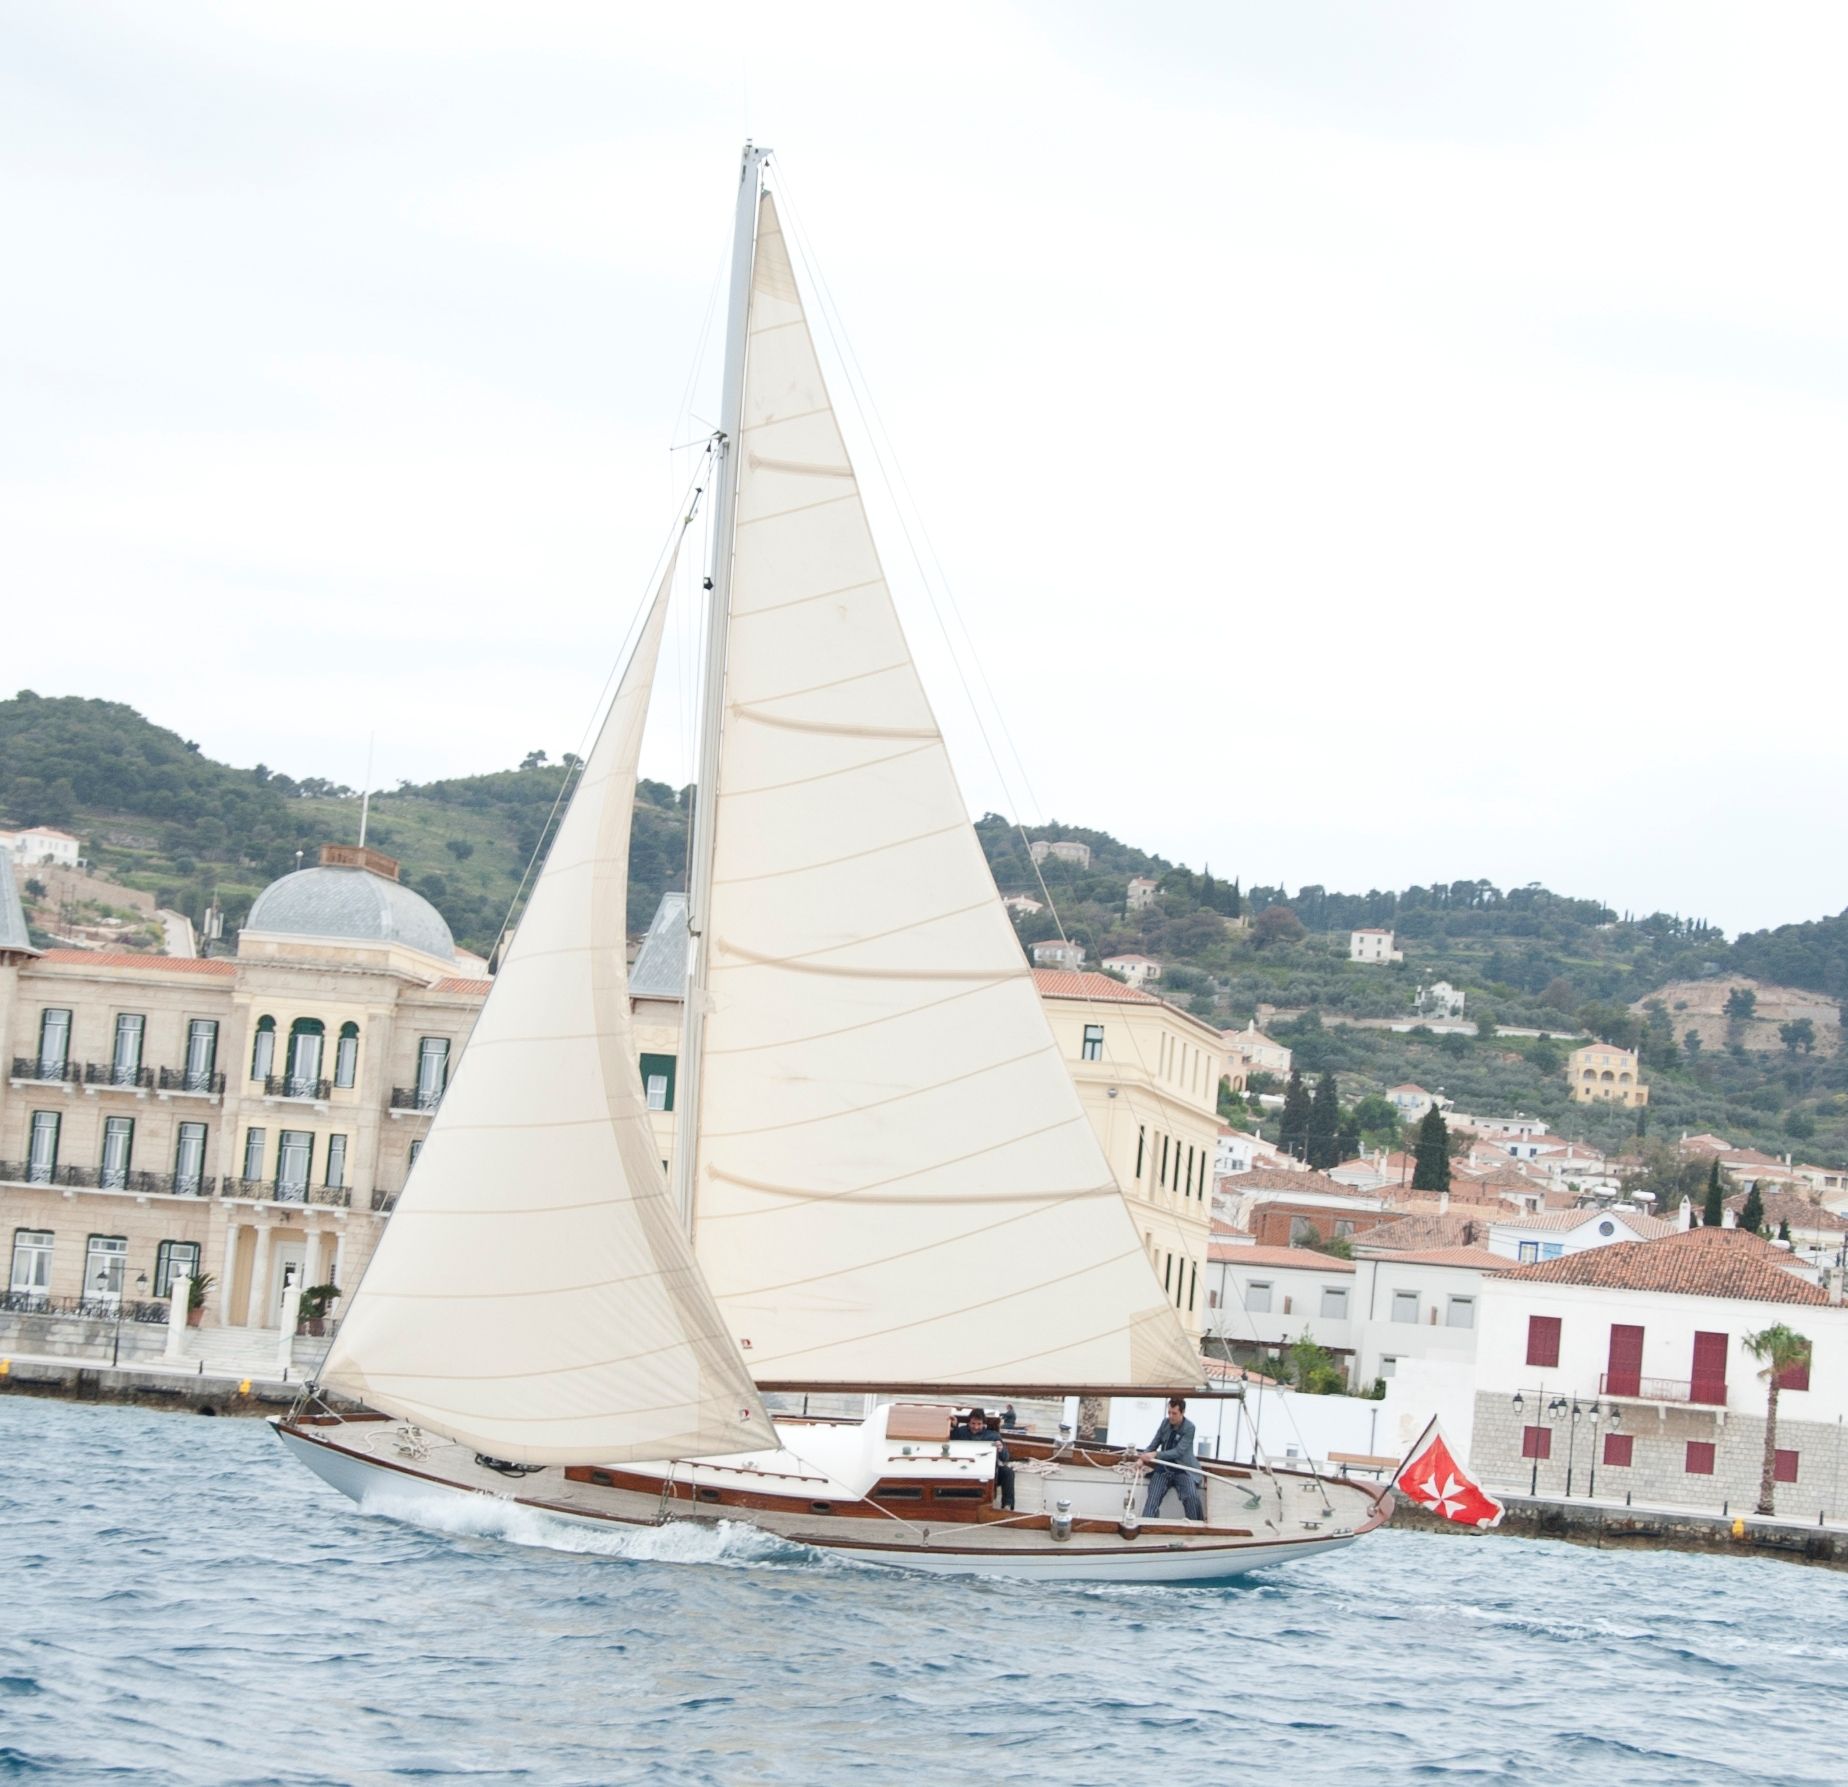 Spetses Classic Yacht Regatta Underway